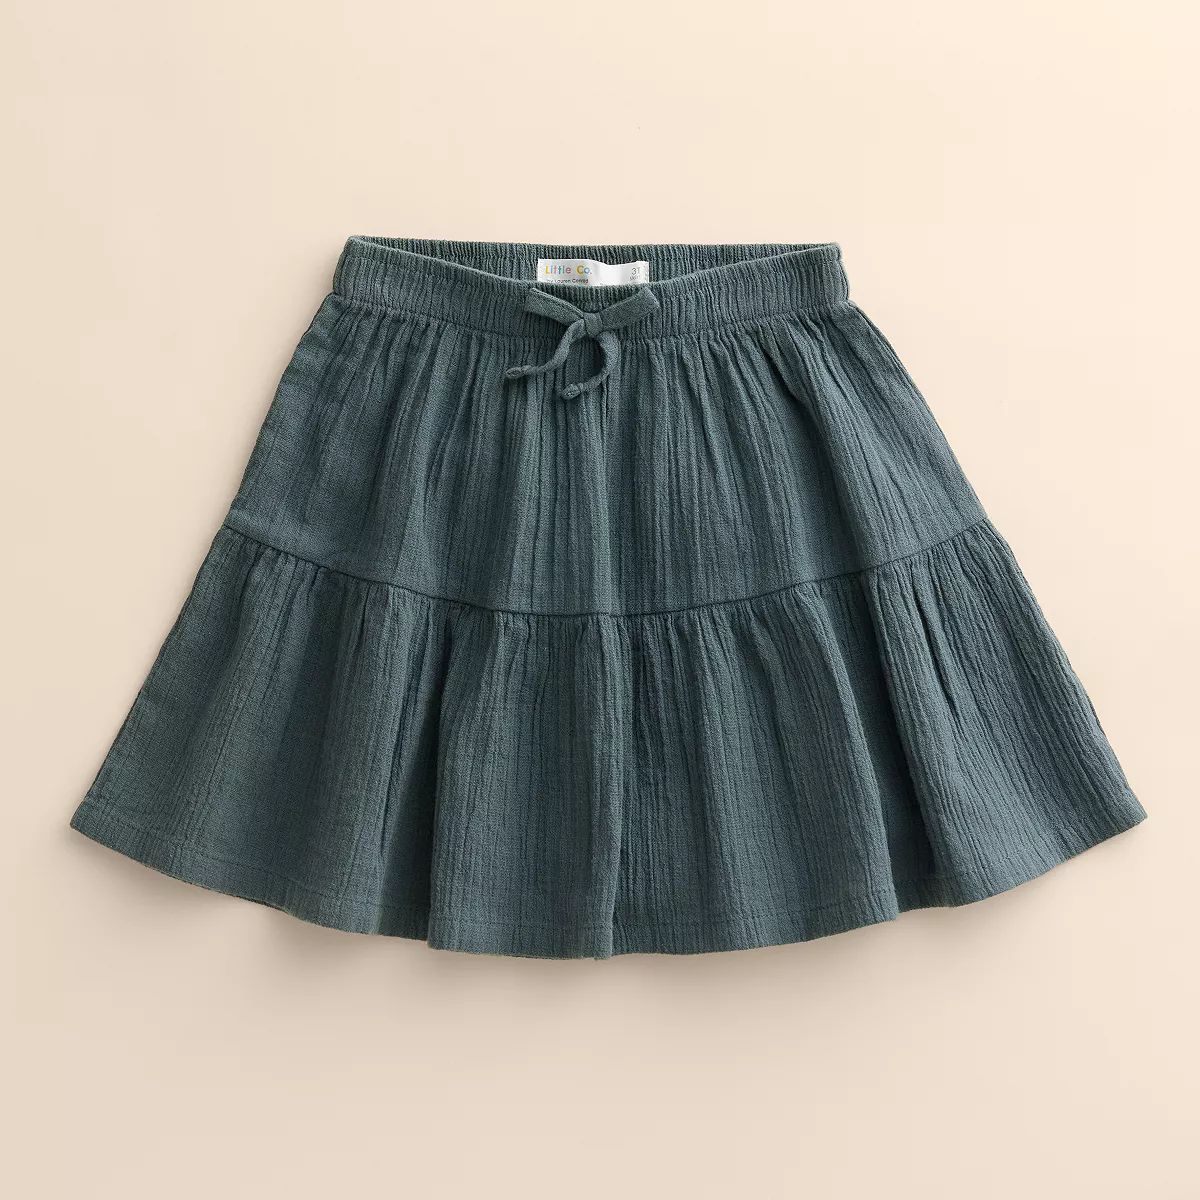 Girls 4-12 Little Co. by Lauren Conrad Tiered Skirt | Kohl's